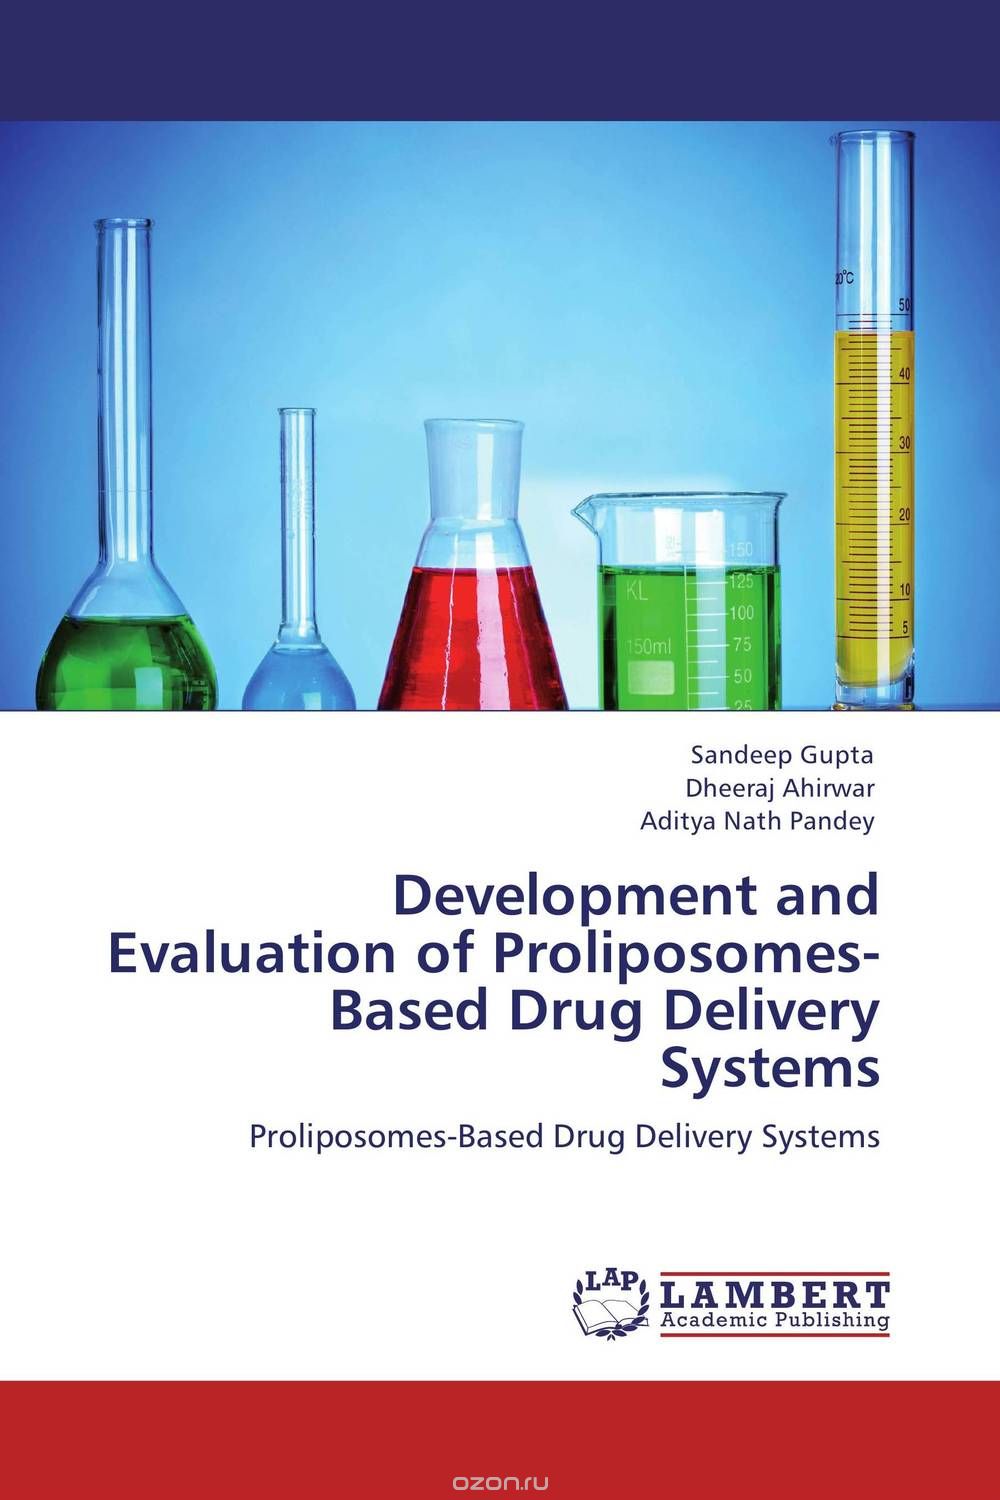 Скачать книгу "Development and Evaluation of Proliposomes-Based Drug Delivery Systems"